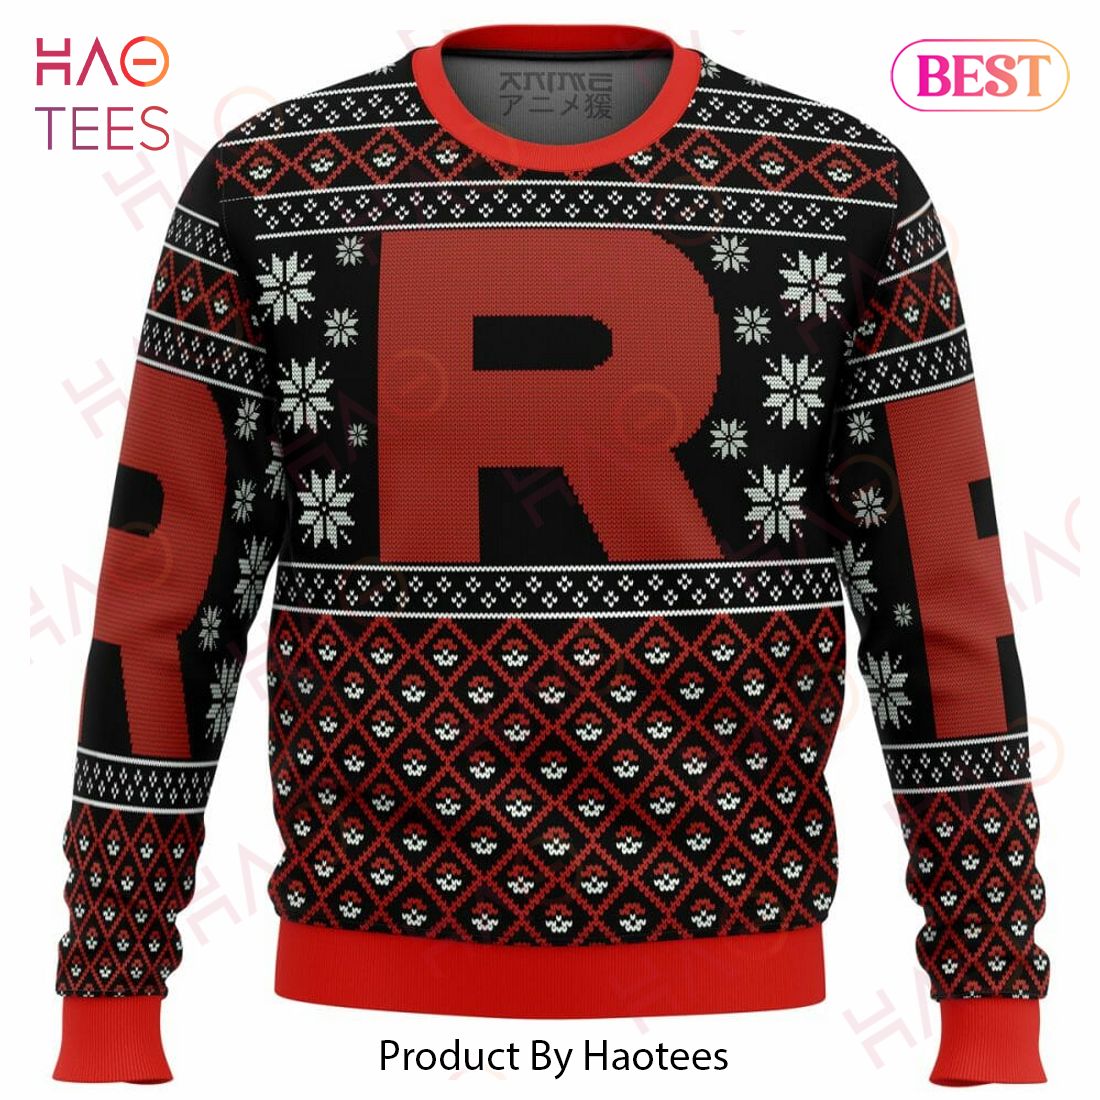 Pokemon Team Rocket Red Black Ugly Christmas Sweater